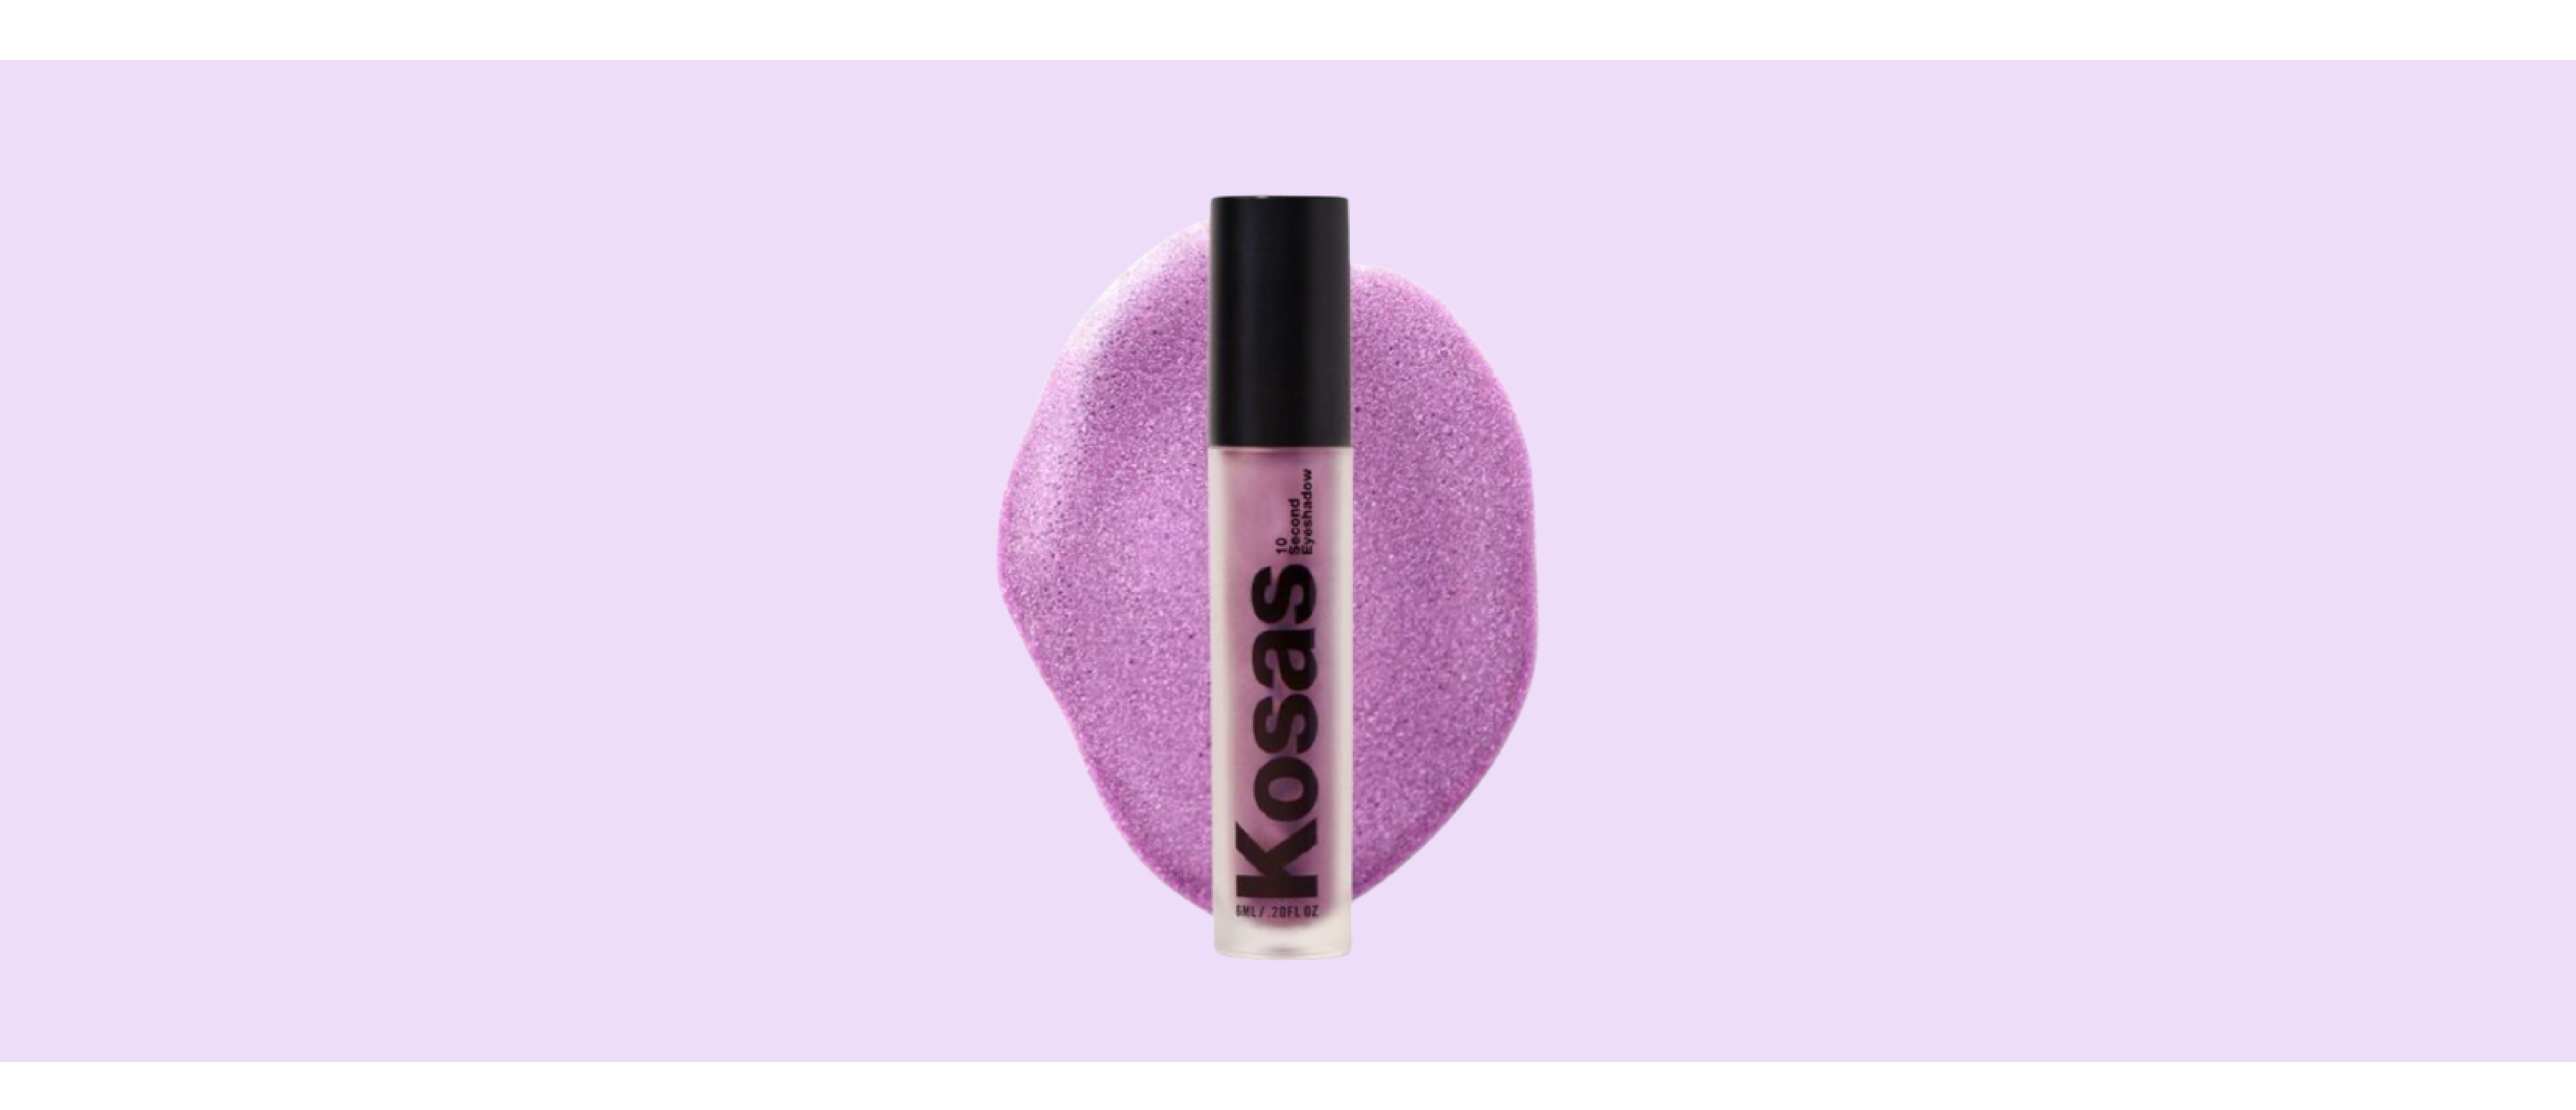 KOSAS - 10-Second Liquid Eyeshadow in Shade 333 Cool Lavender